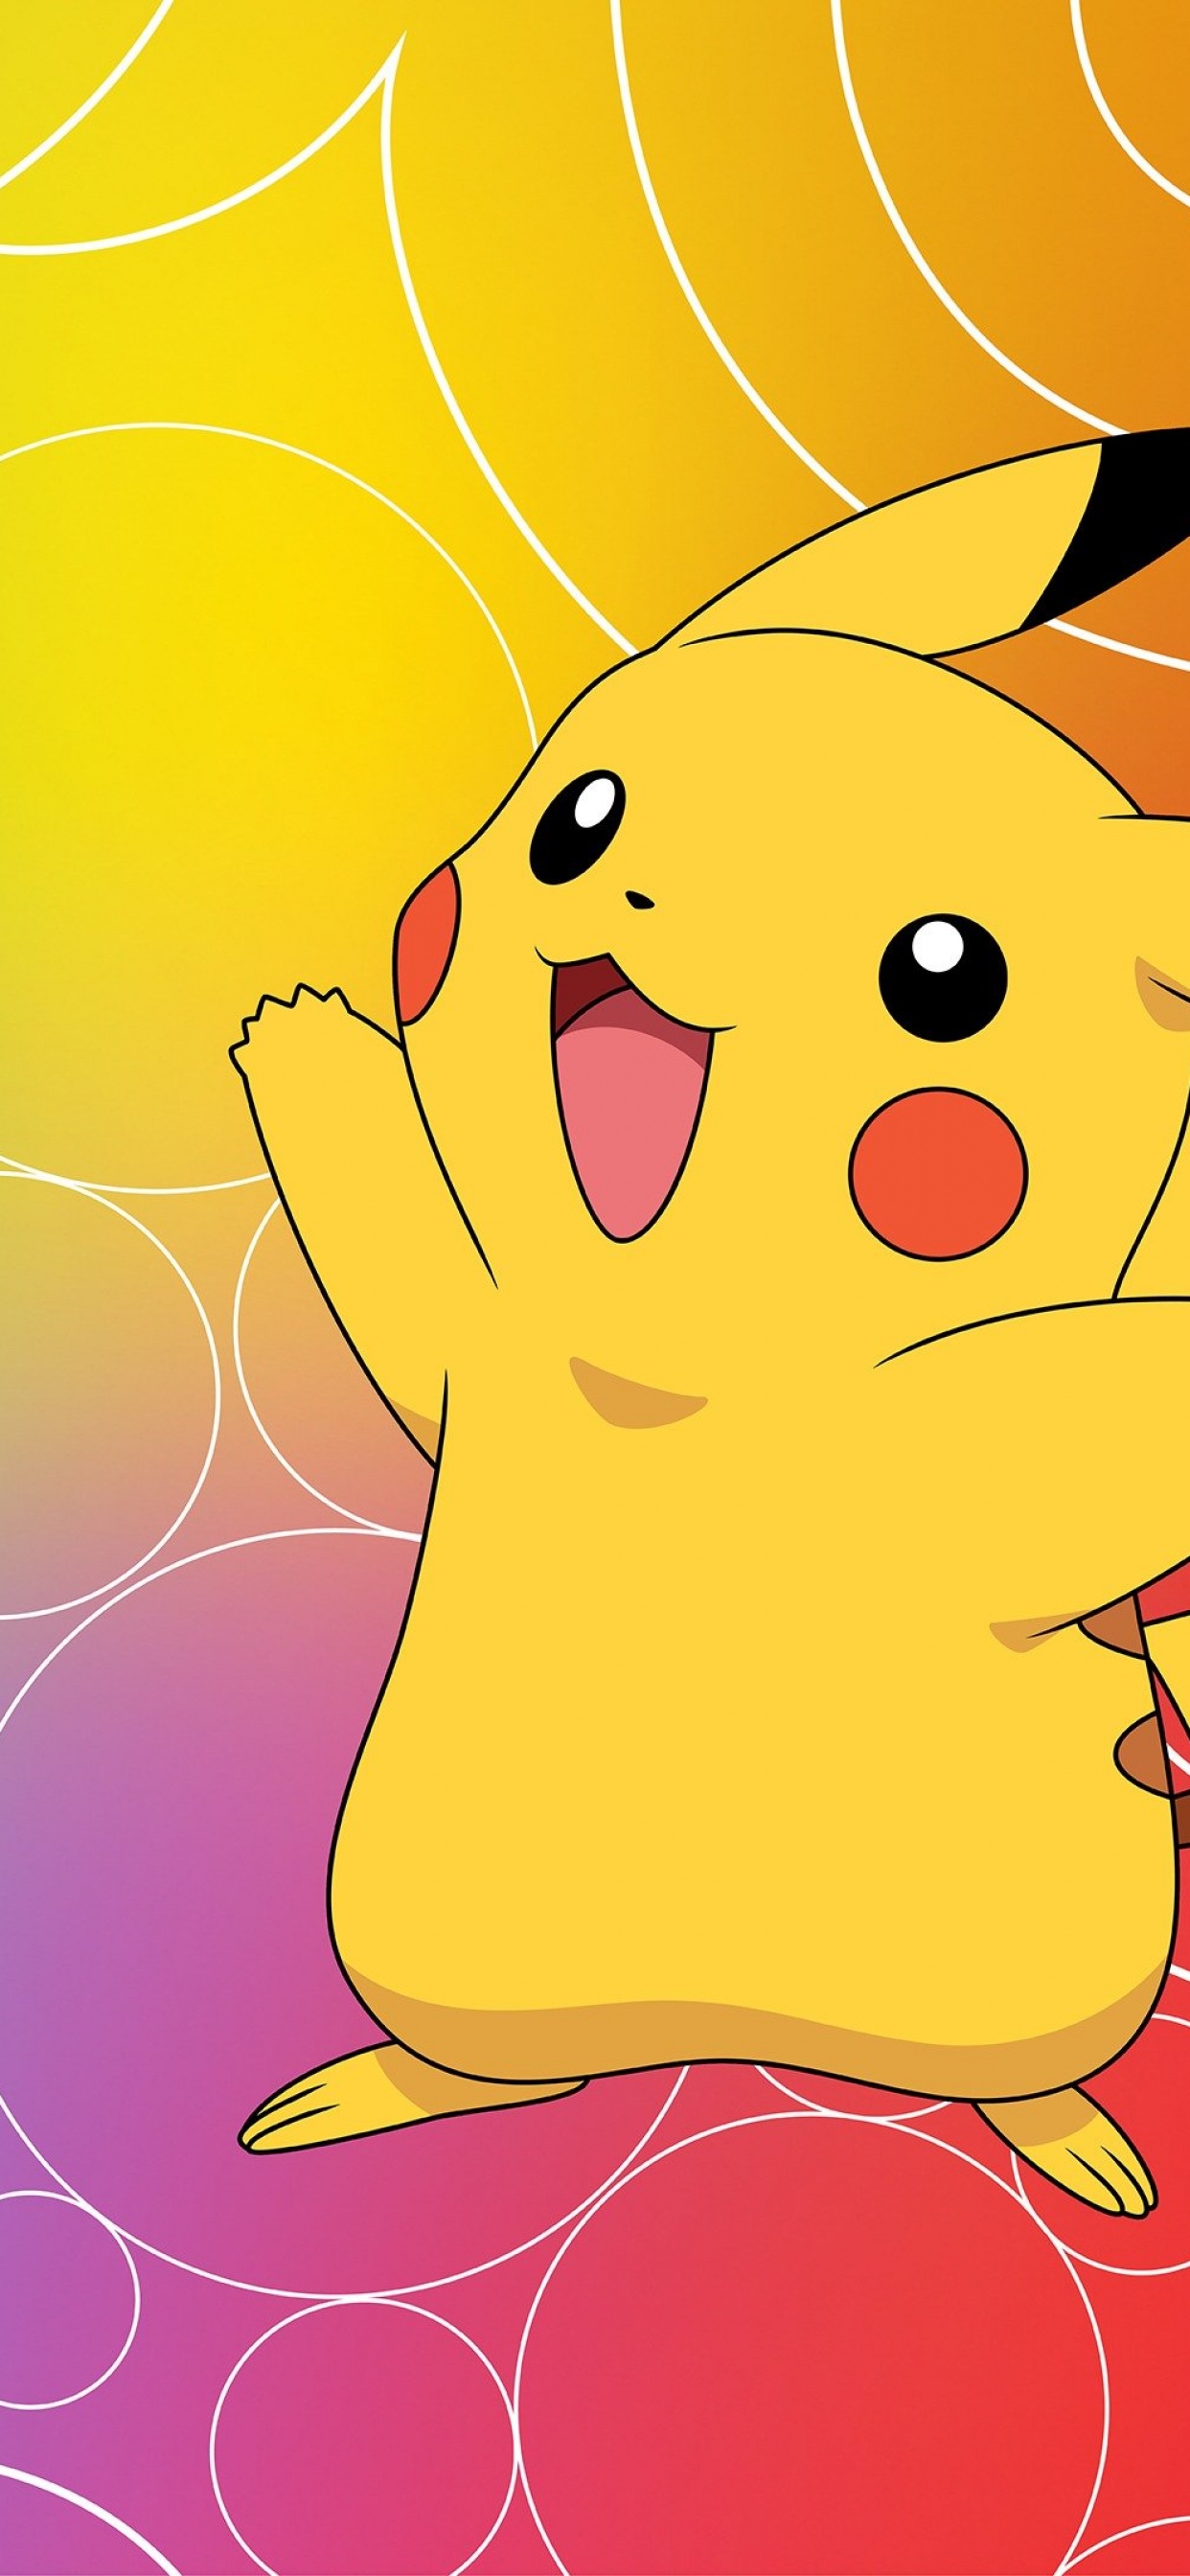 Cute Pikachu Wallpapers  Top 25 Best Cute Pikachu Wallpapers Download